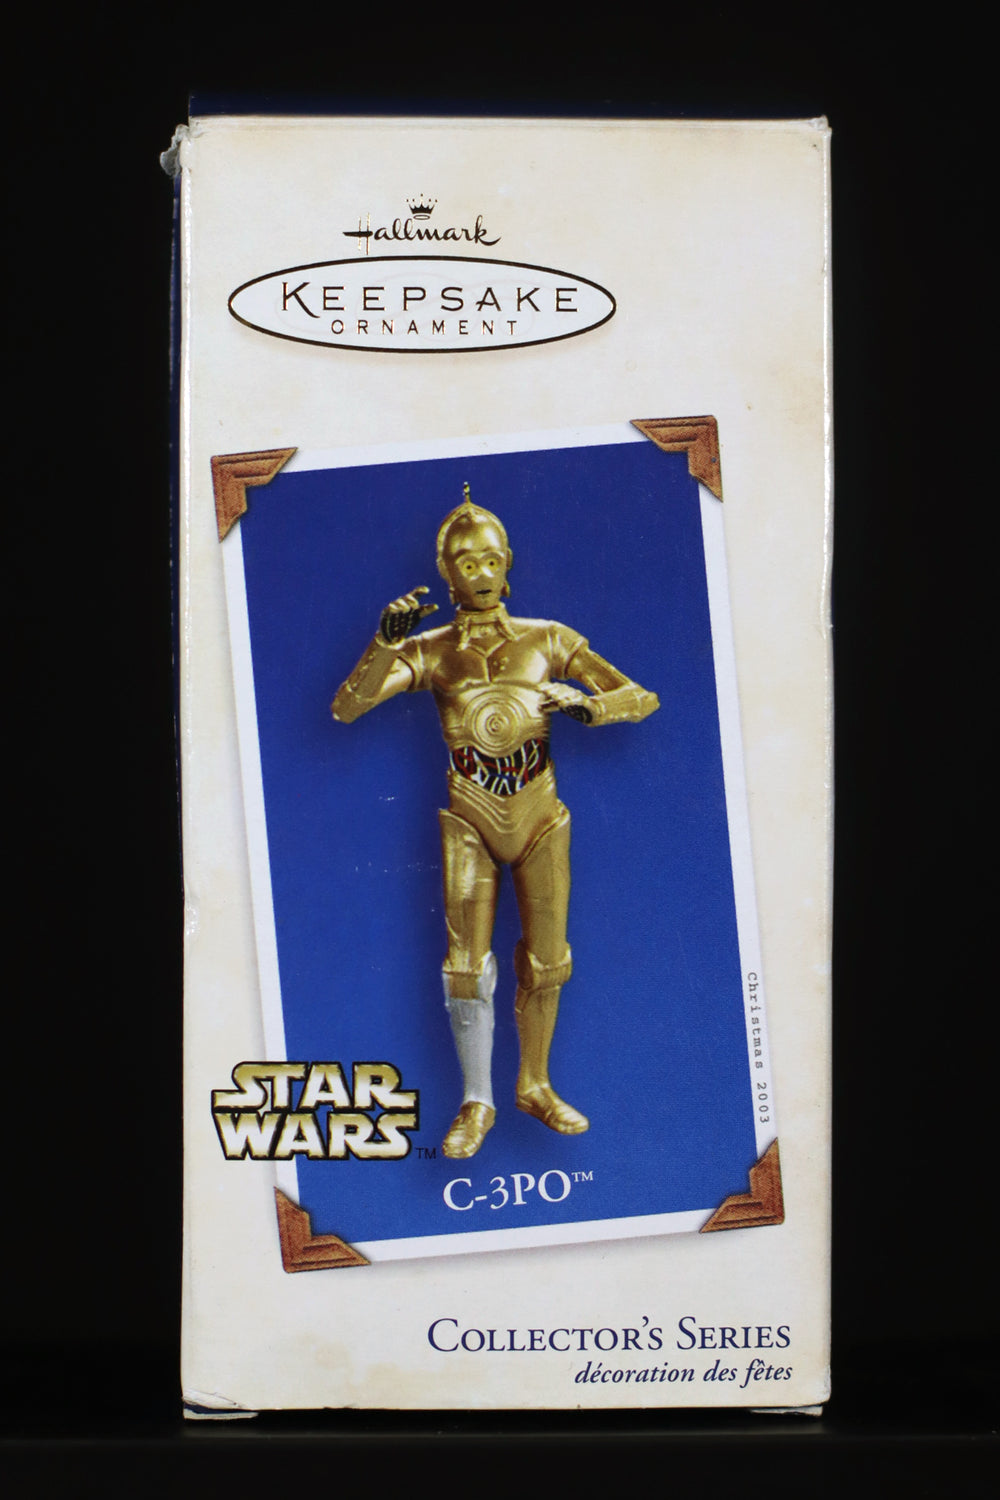 Star Wars: C-3PO Keepsake Ornament Hallmark